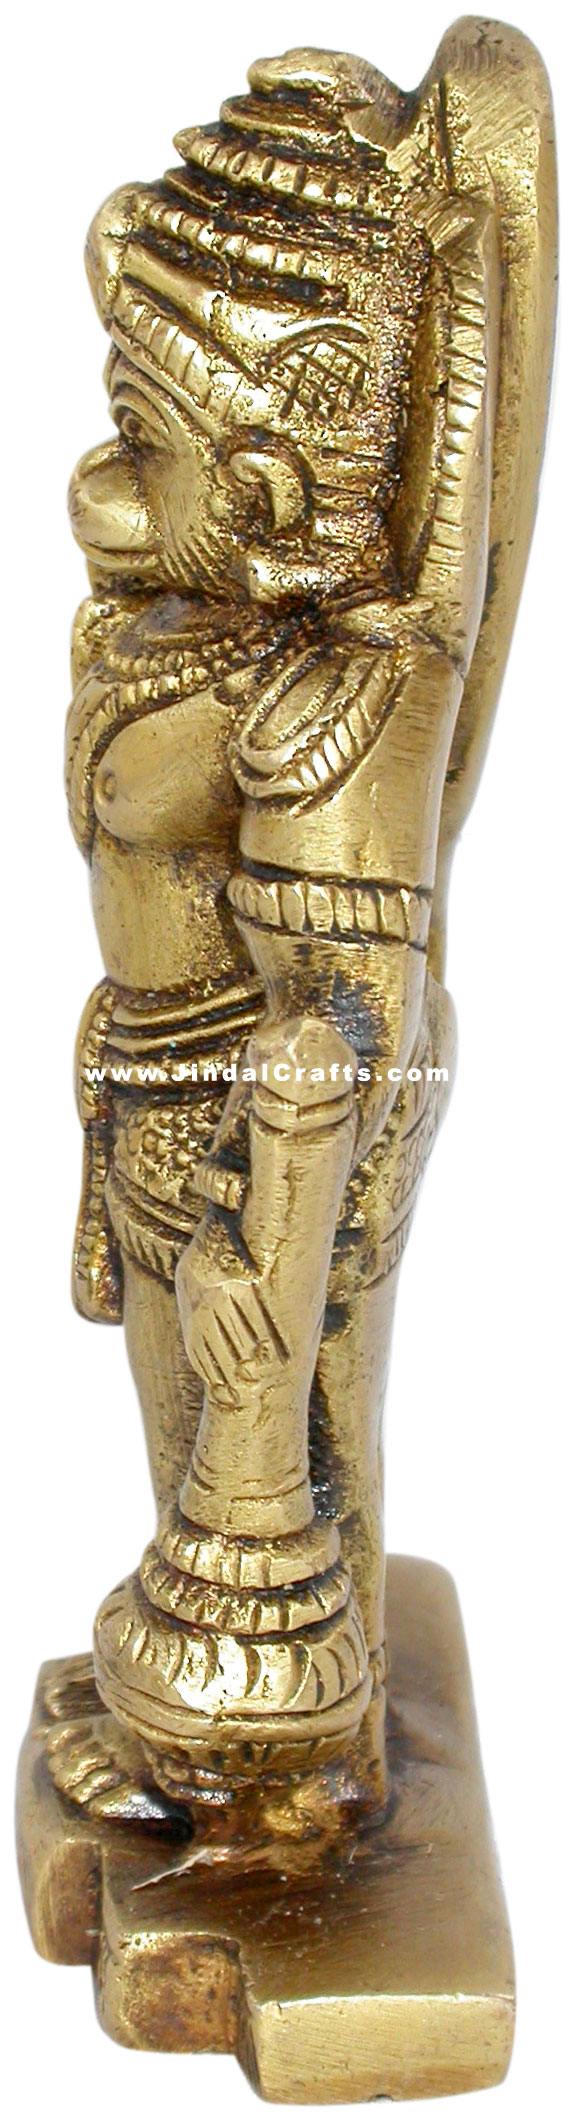 Lord Hanuman Indian God Brass Sculpture Hand Crafted